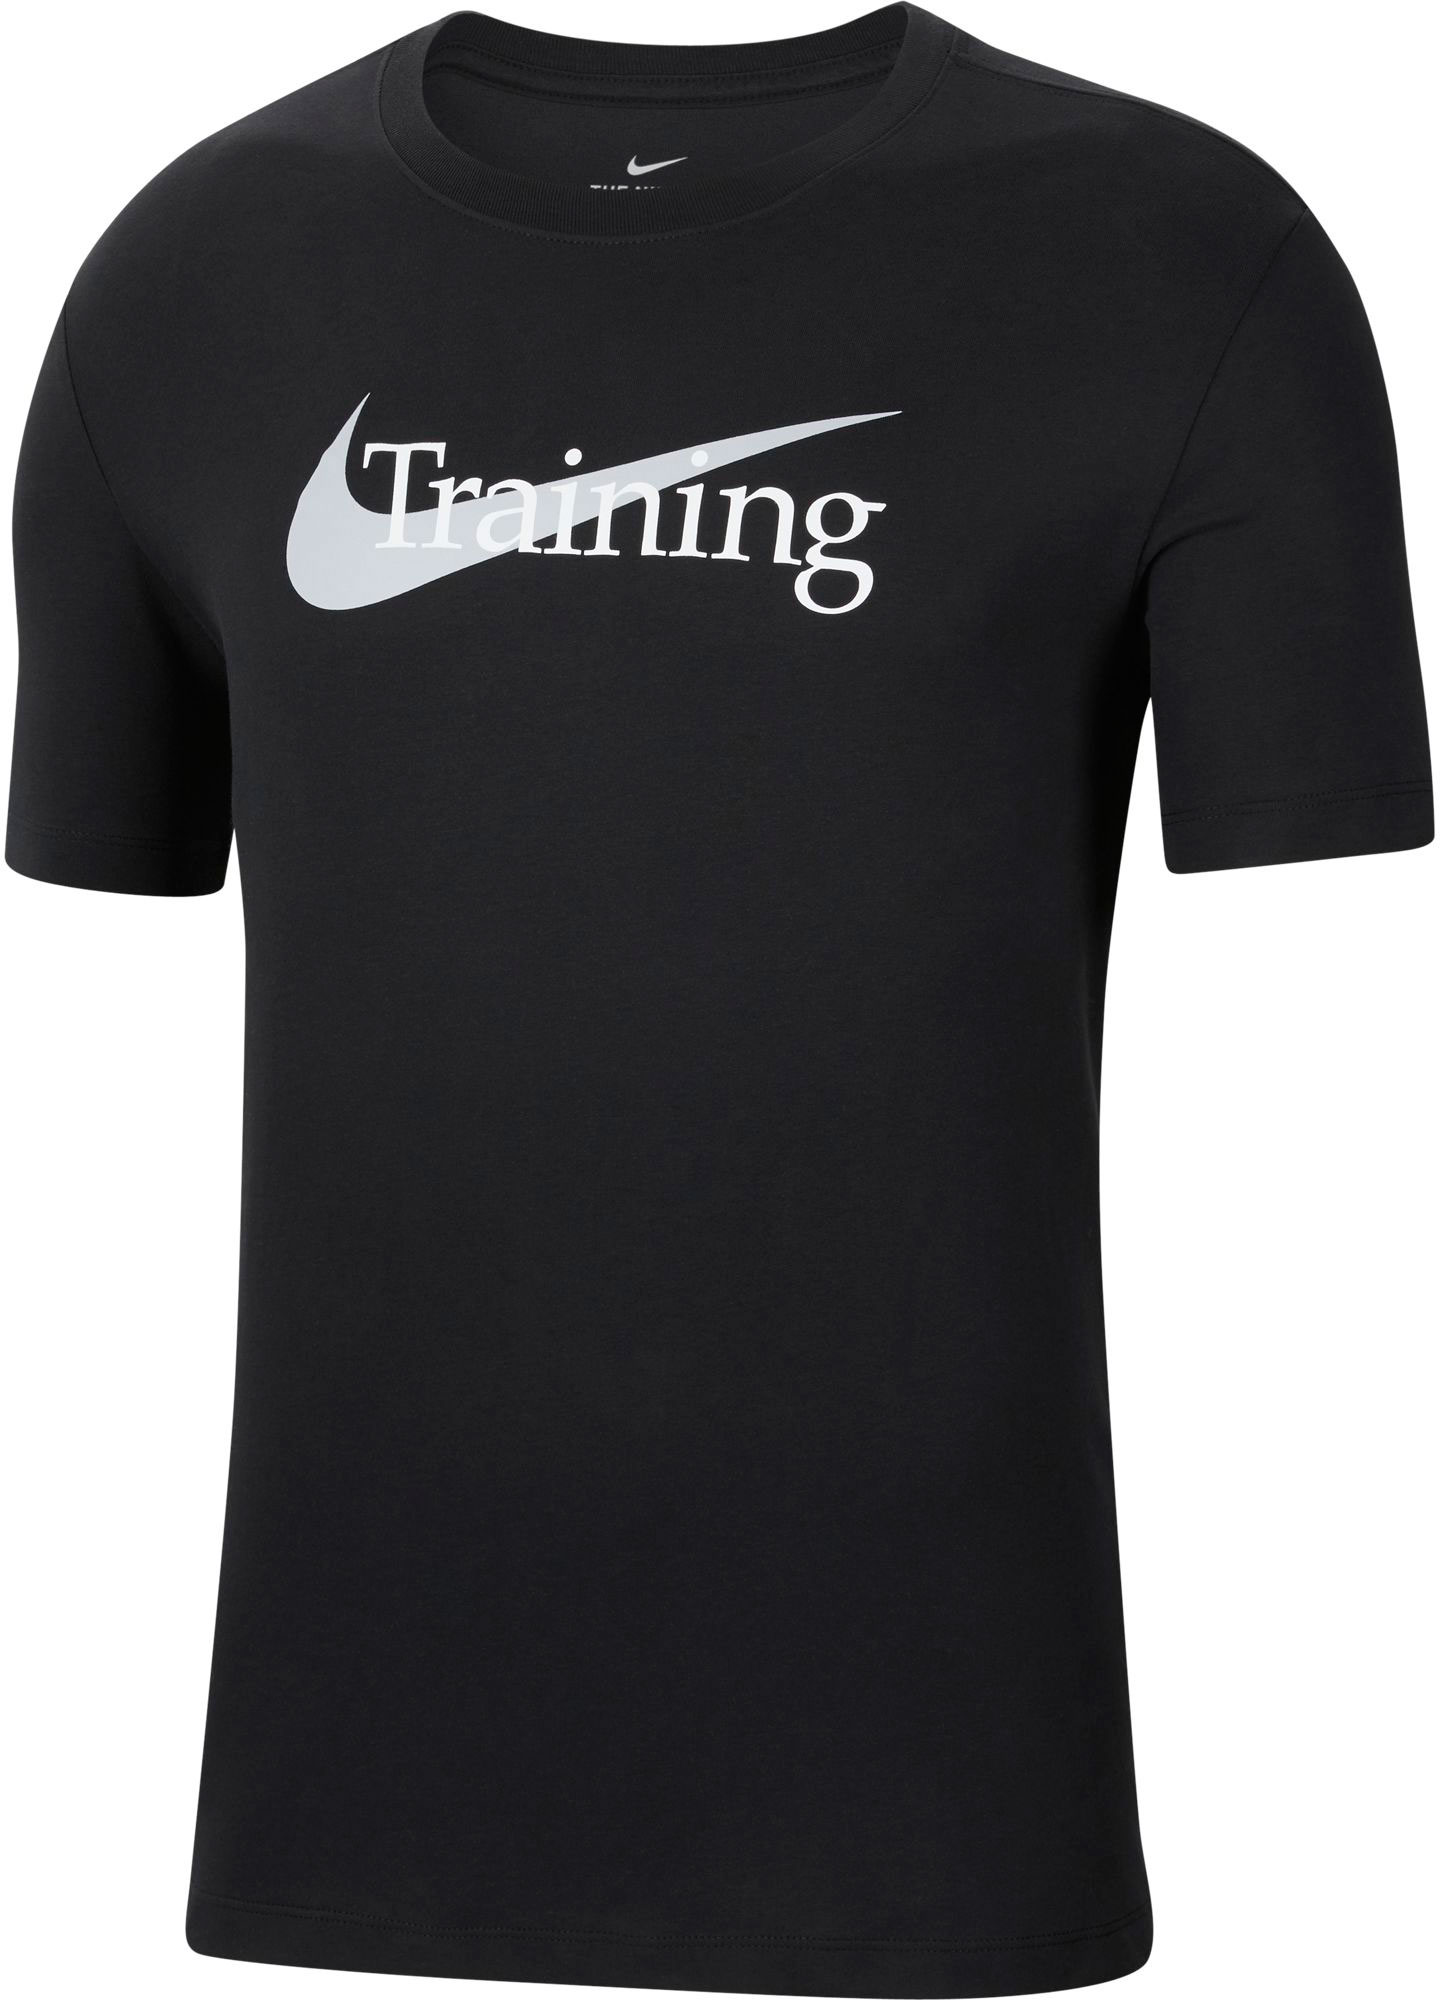 Men’s training T-shirt